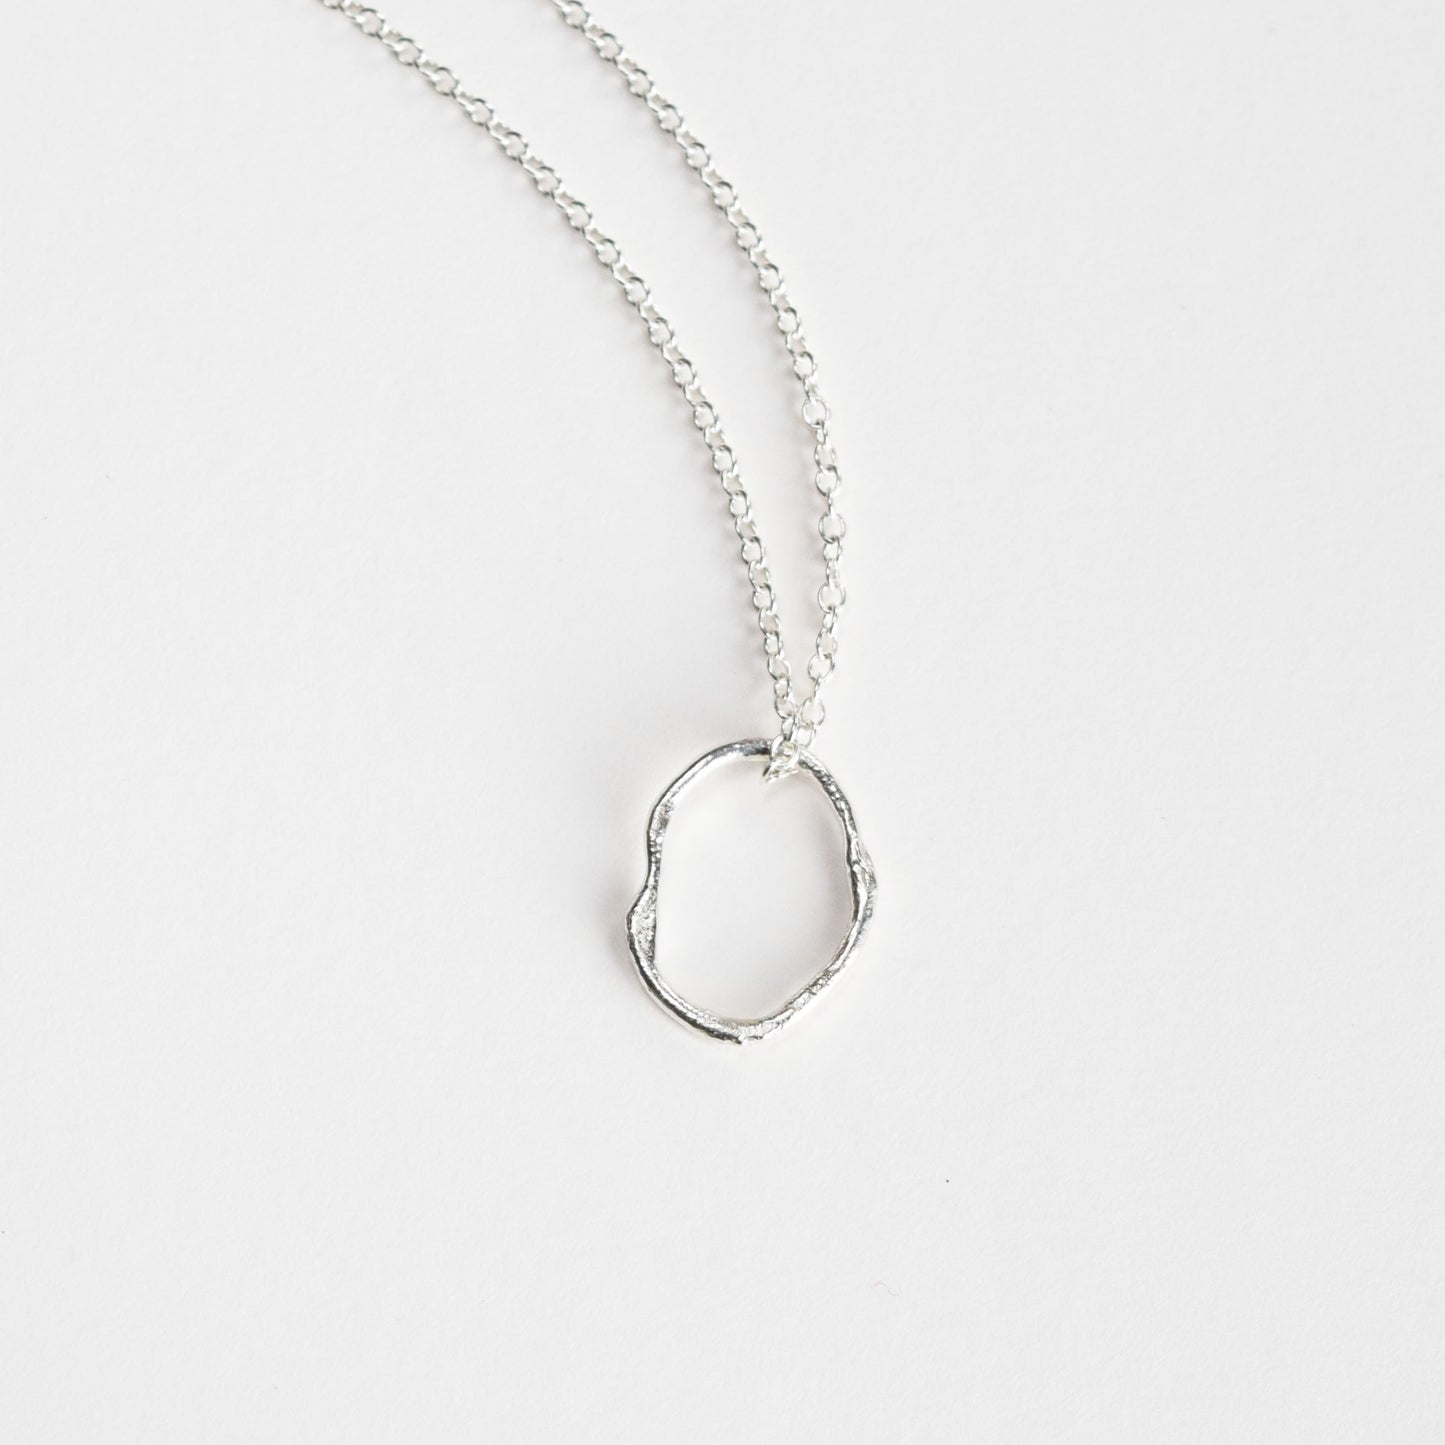 Molten oval necklace on light background